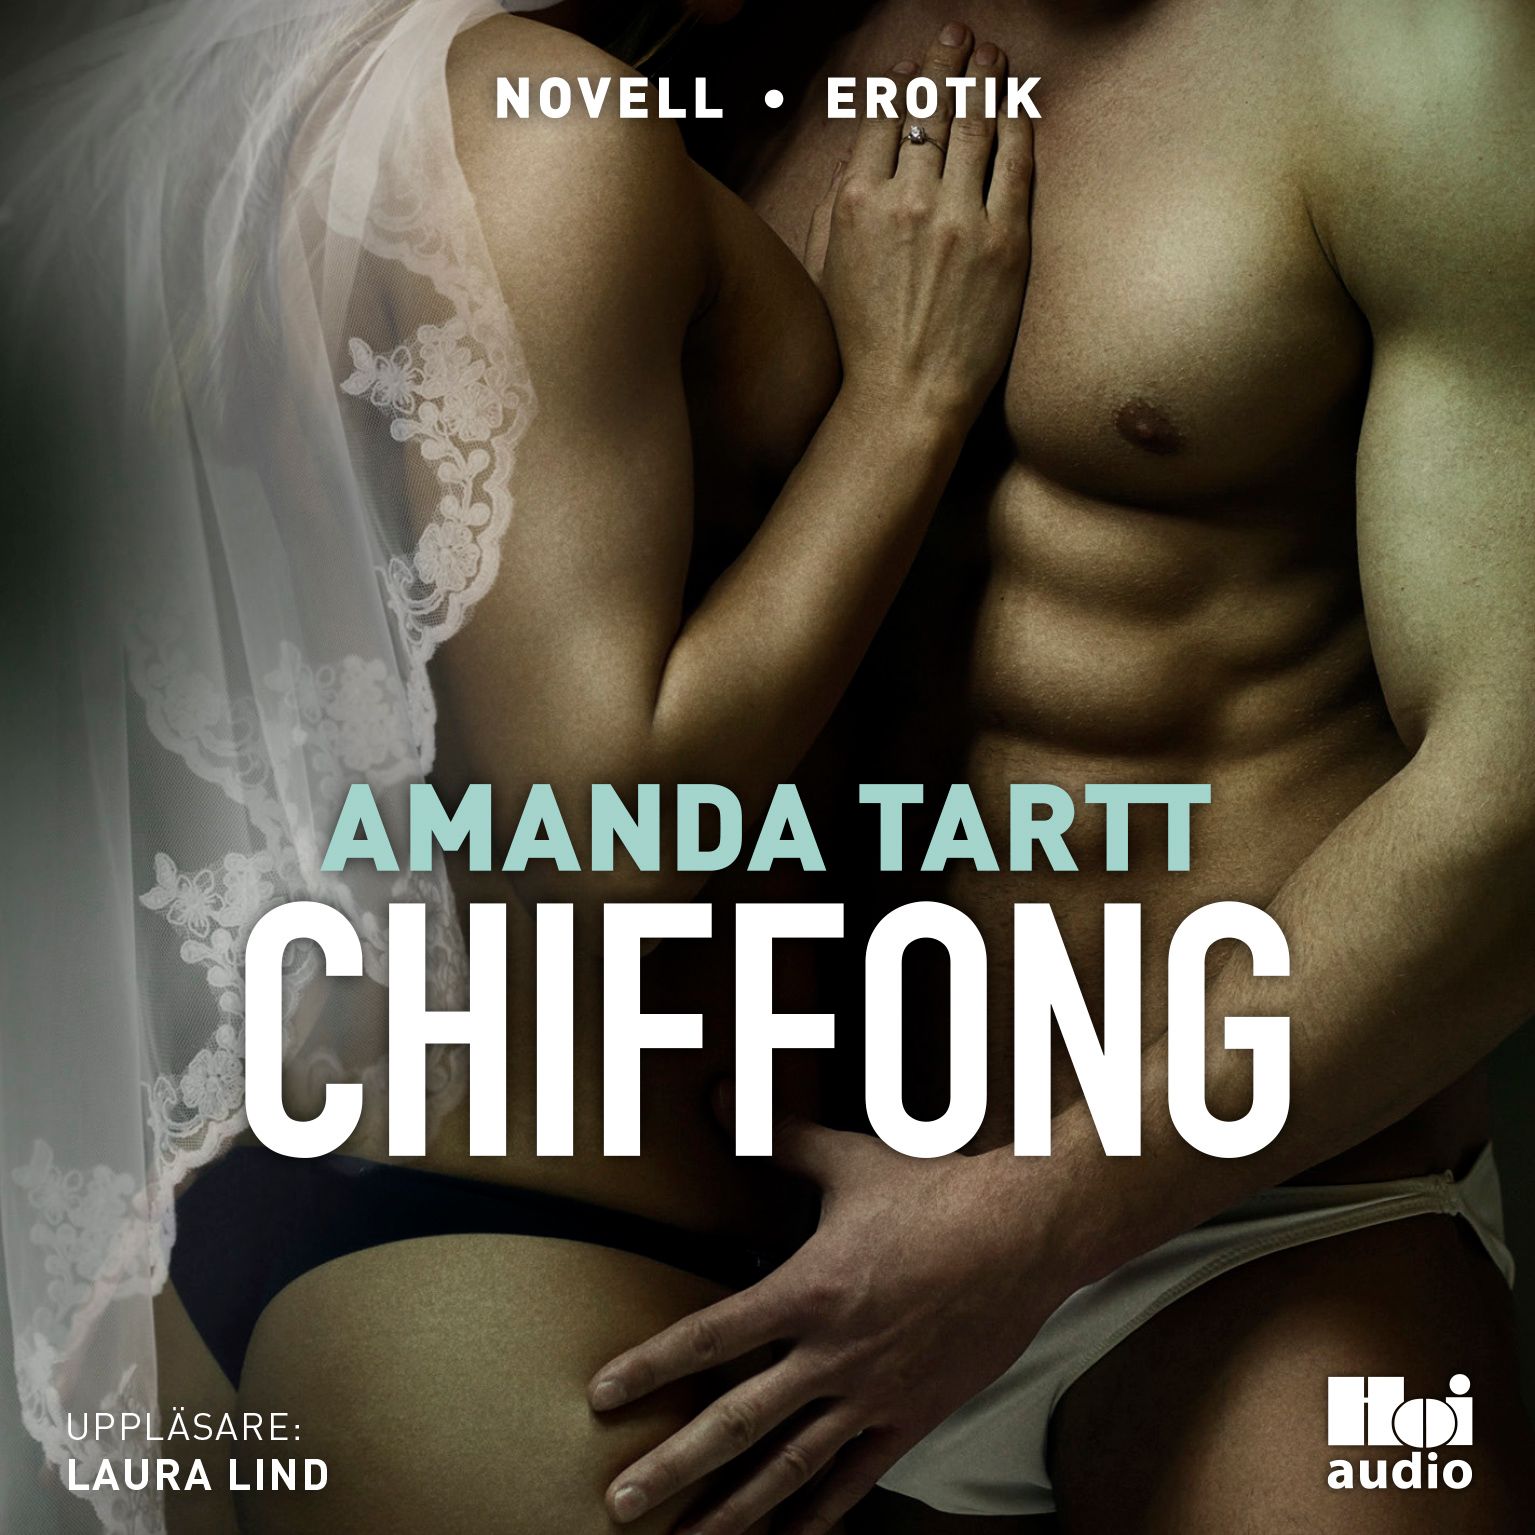 Chiffong, ljudbok av Amanda Tartt